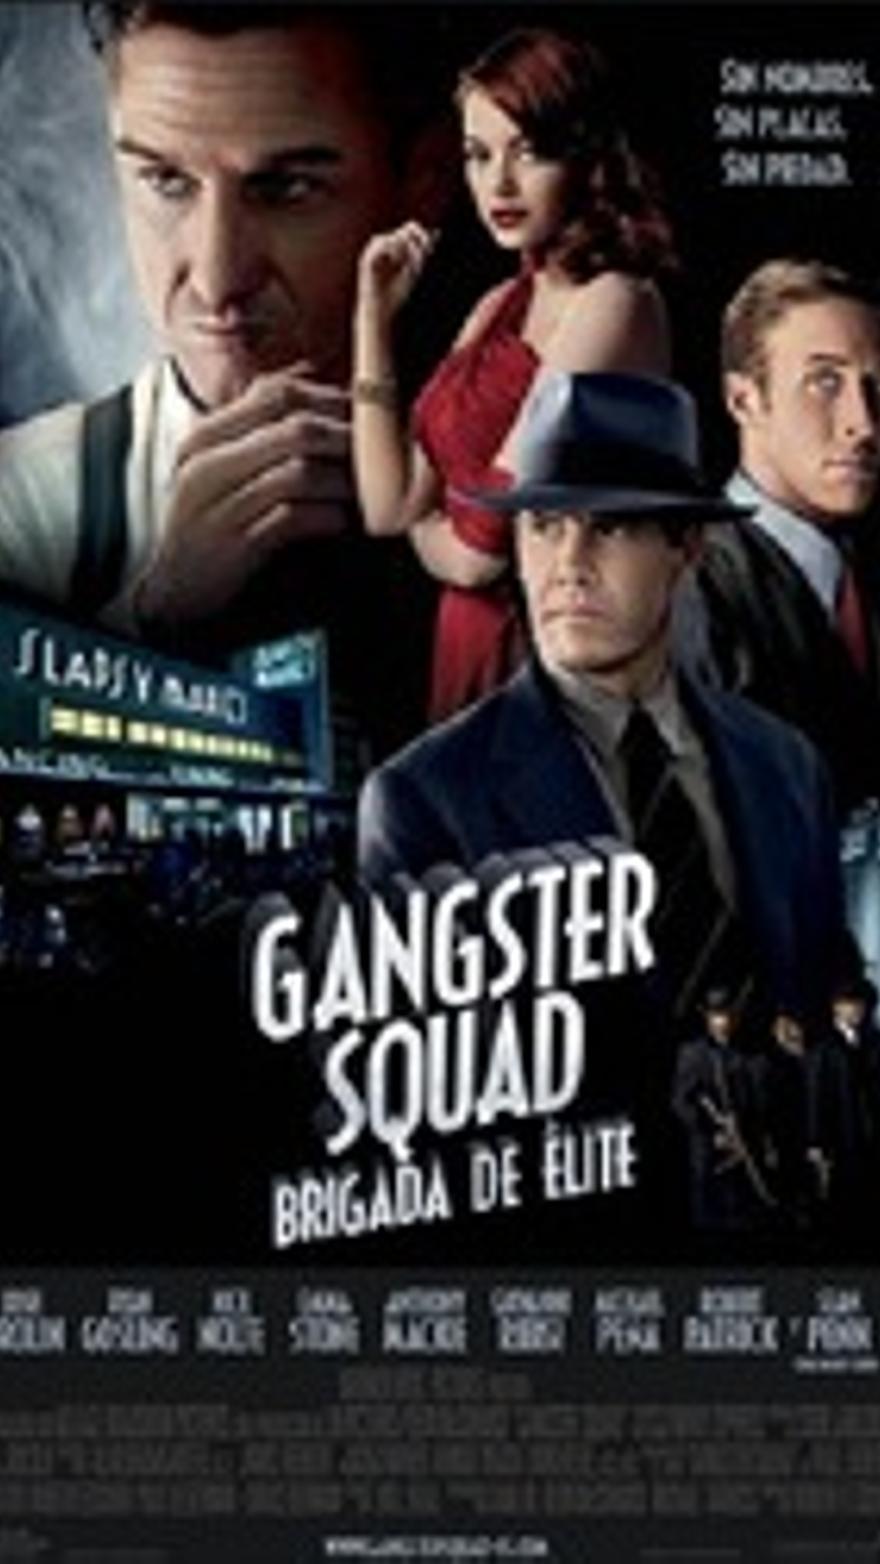 Gangster Squad. Brigada de élite